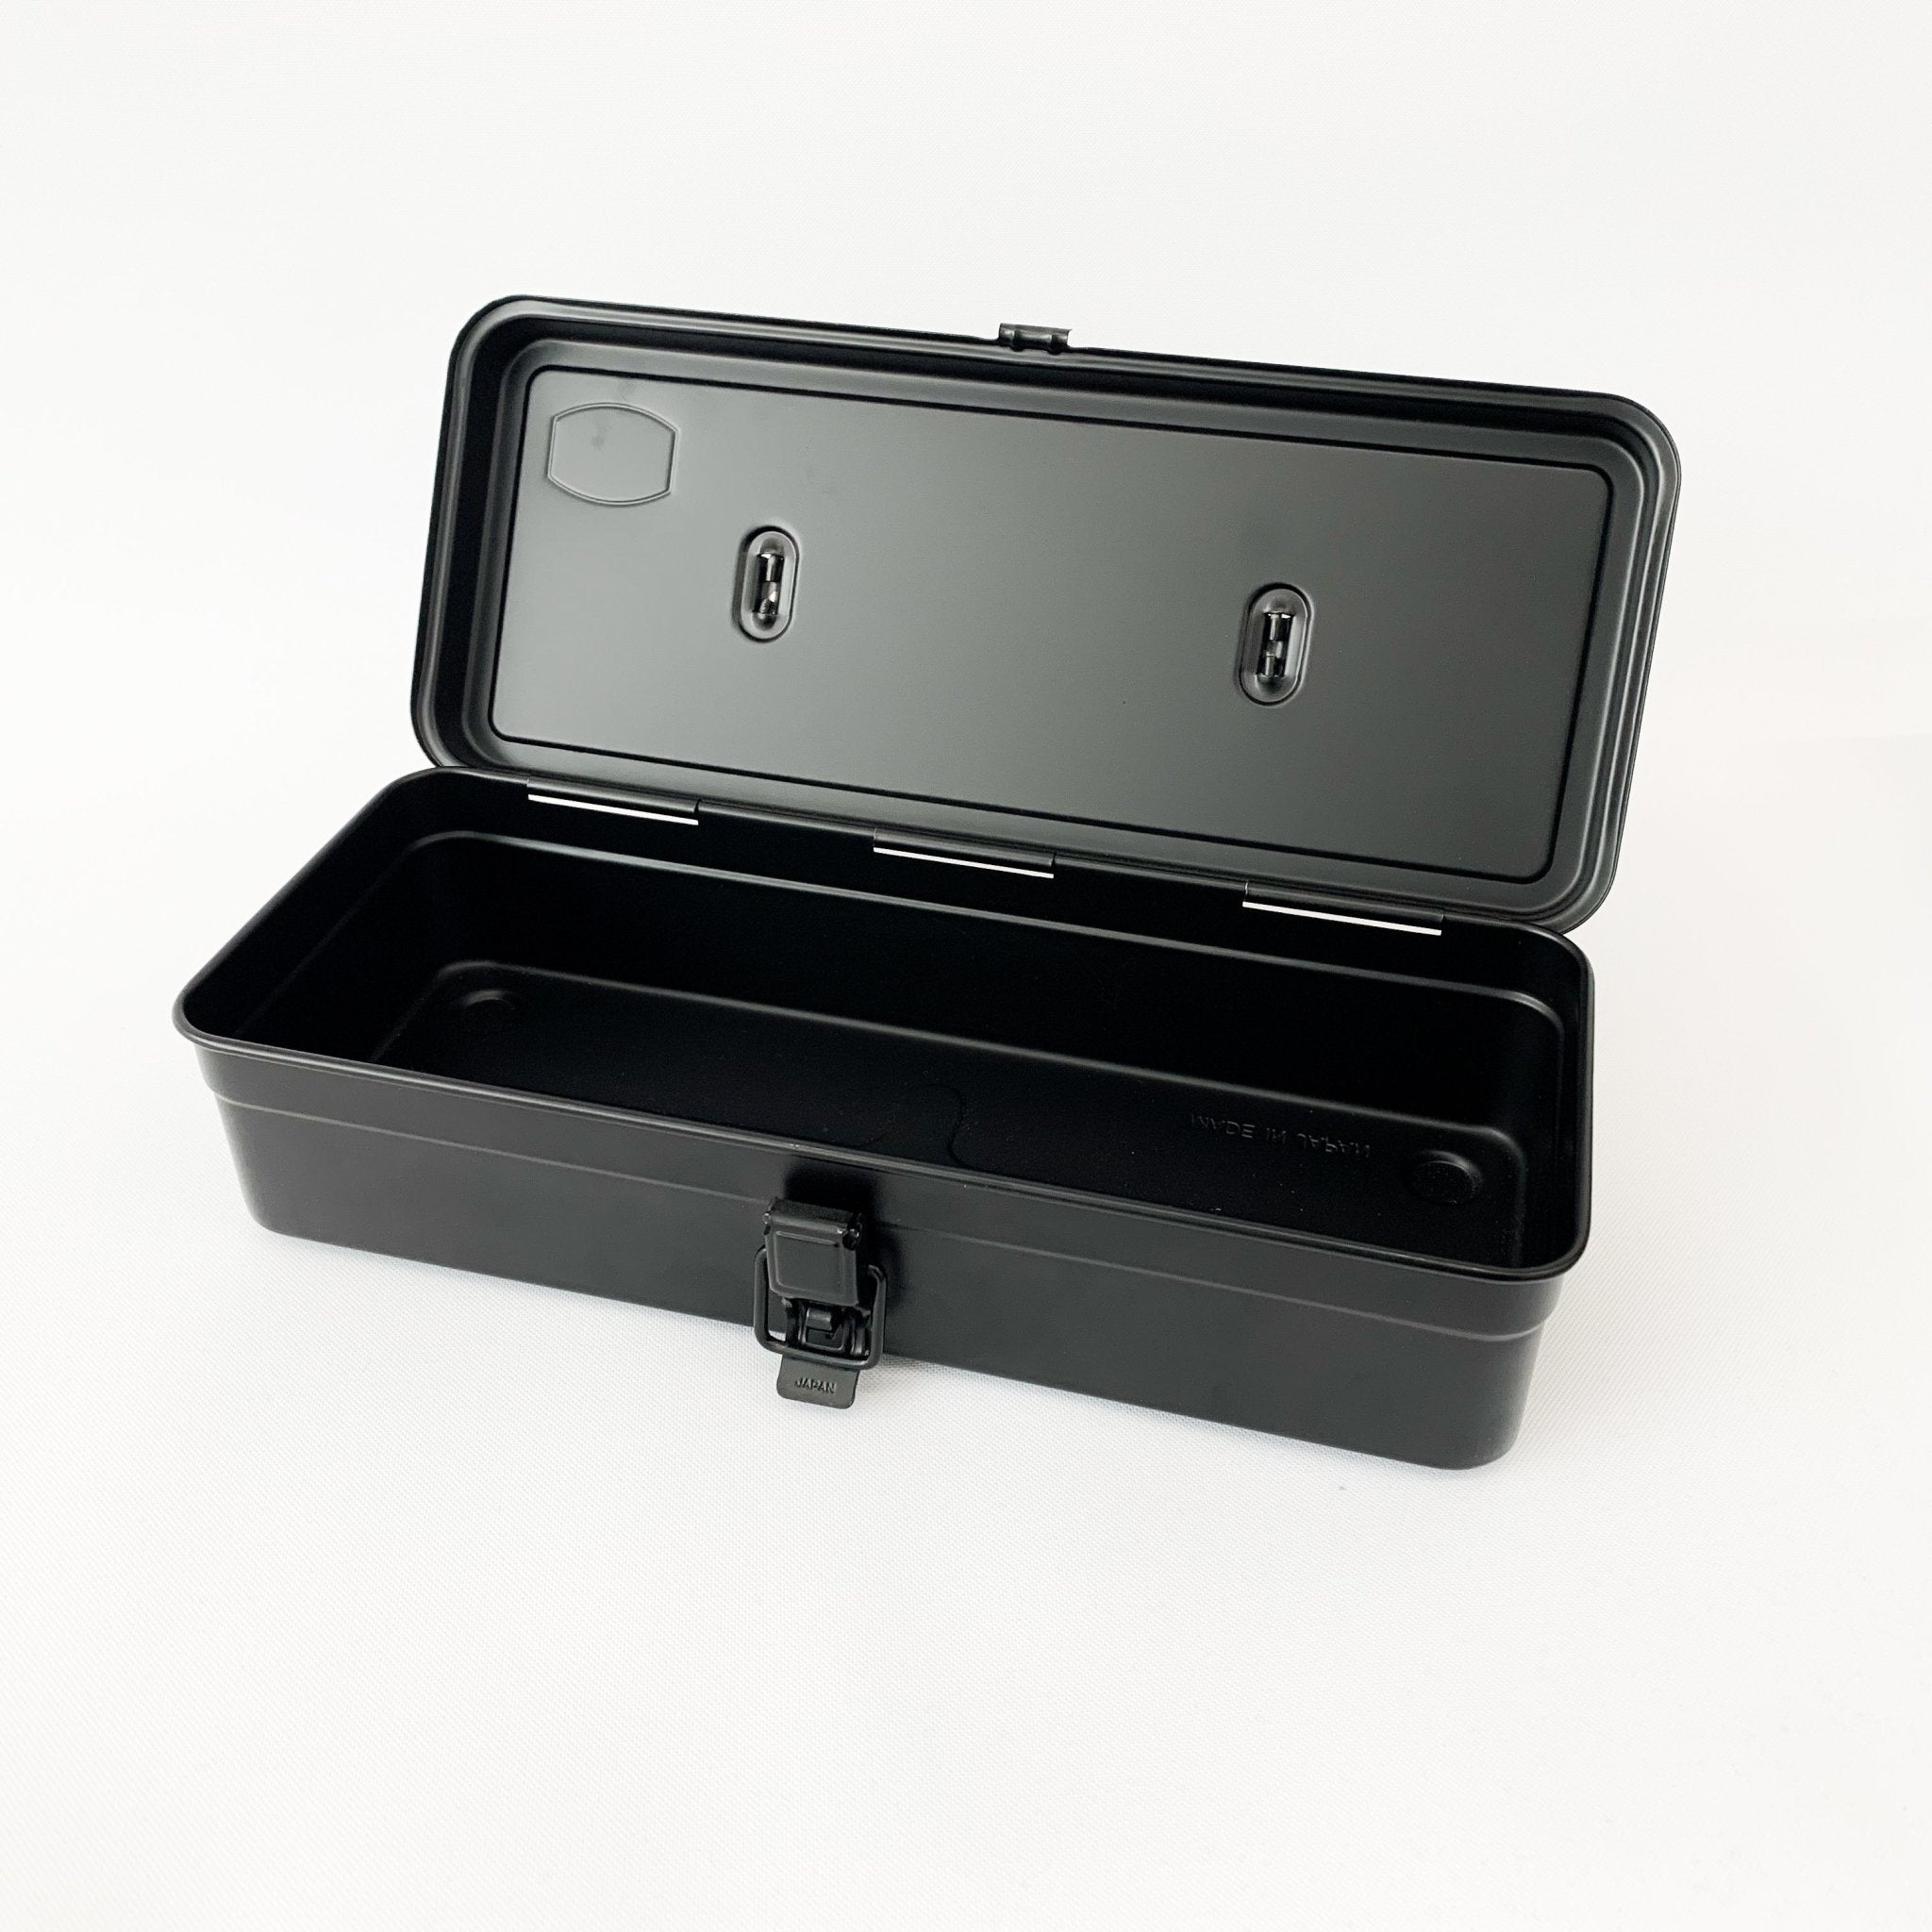 Toyo Steel - Camber Top Portable Tool Box – JINEN